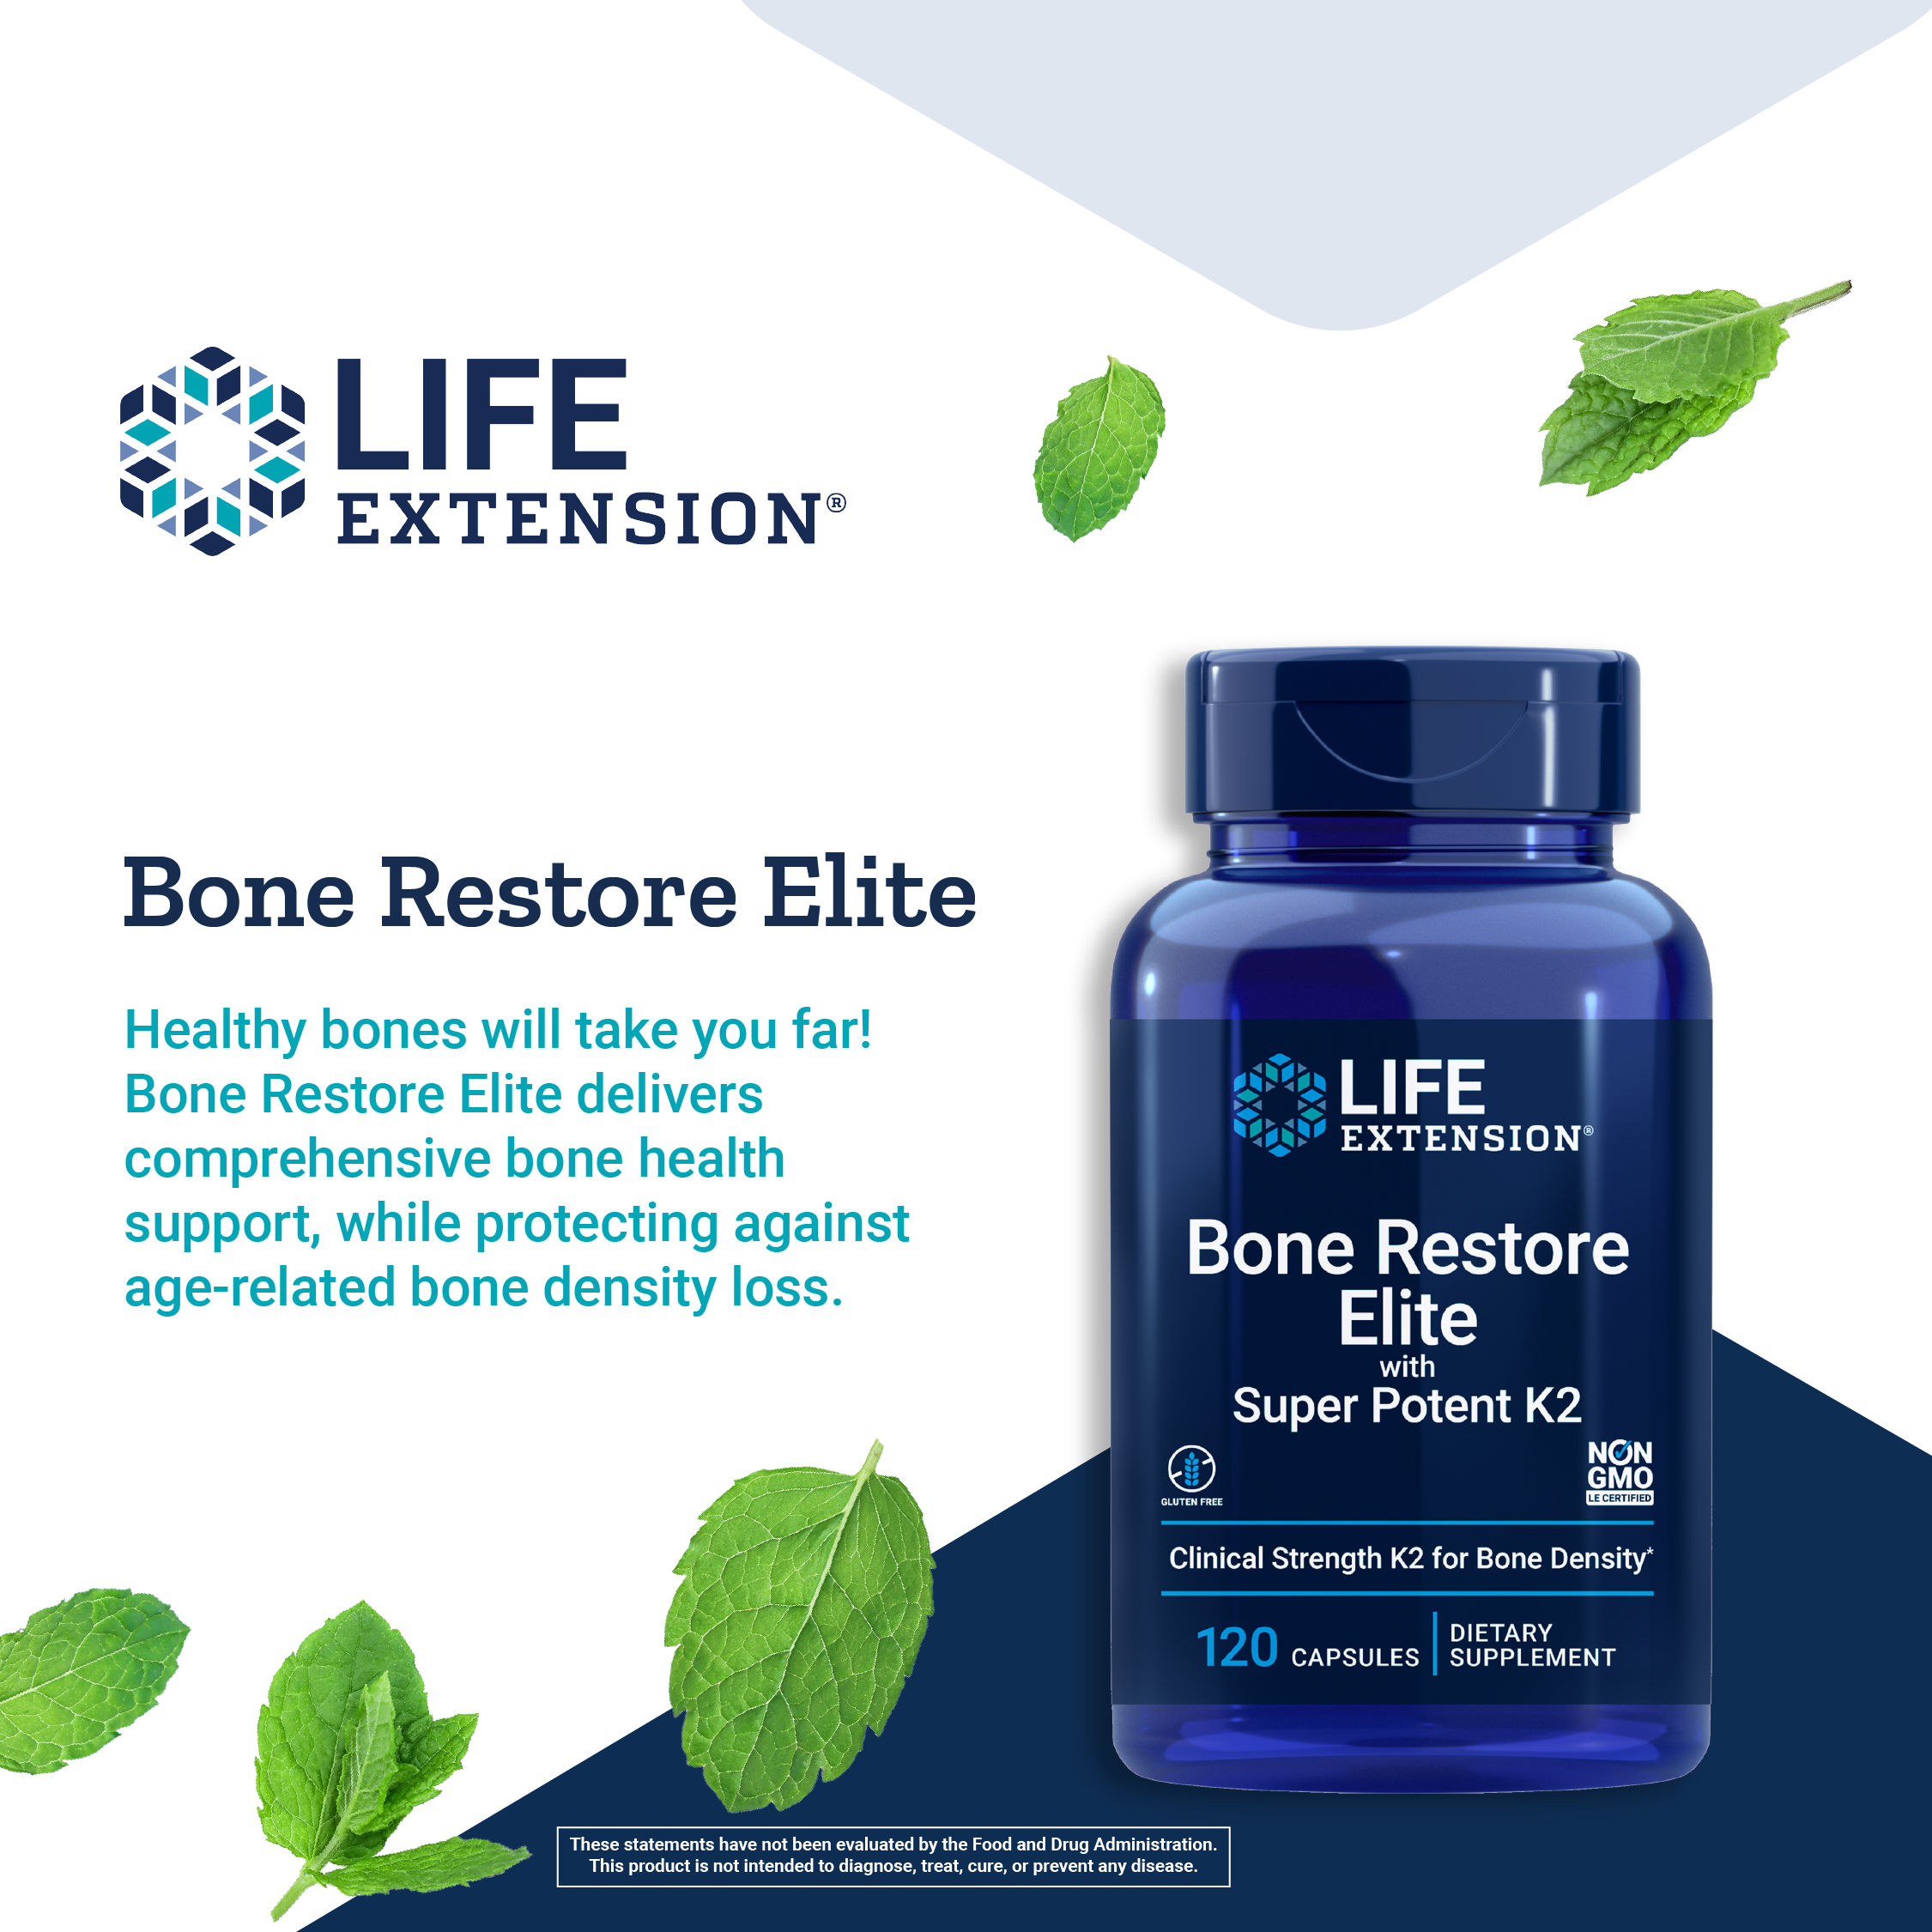 Life Extension Bone Restore Elite with Super Potent K2 - Clinically Studied Vitamin K2 Dose & Calcium, Promotes Bone Health & Density - Gluten-Free, Non-GMO - 120 Capsules - image 4 of 8